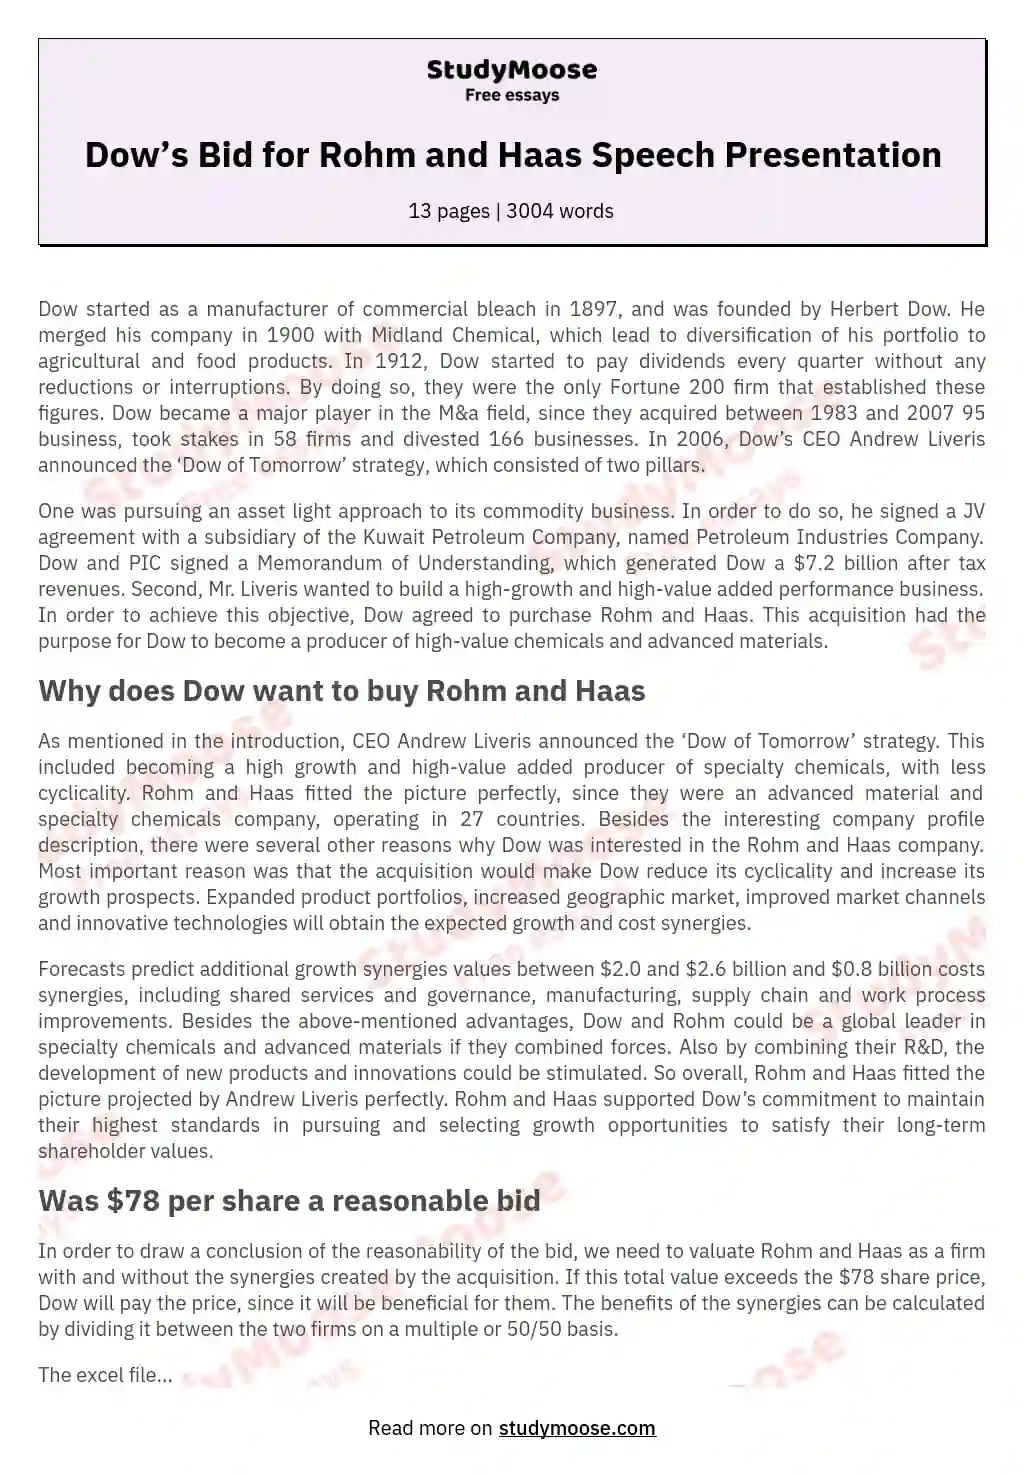 Dow’s Bid for Rohm and Haas Speech Presentation essay